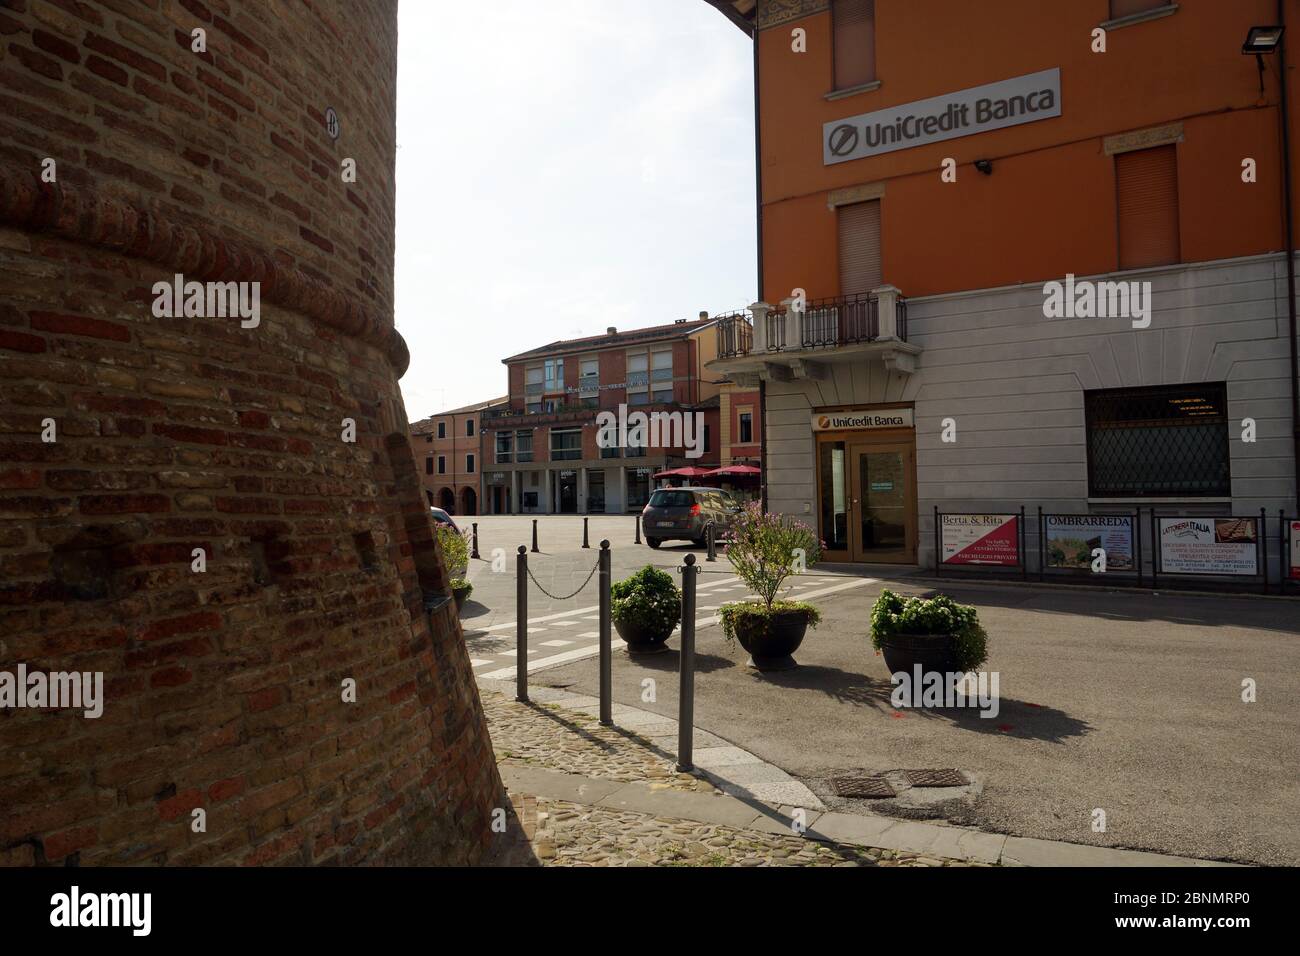 Vista de la plaza central de la ciudad. Banco UniCredit. Forlimpopoli, Emilia-Romaña, provincia de Forlì-Cesena, Italia. Foto de stock